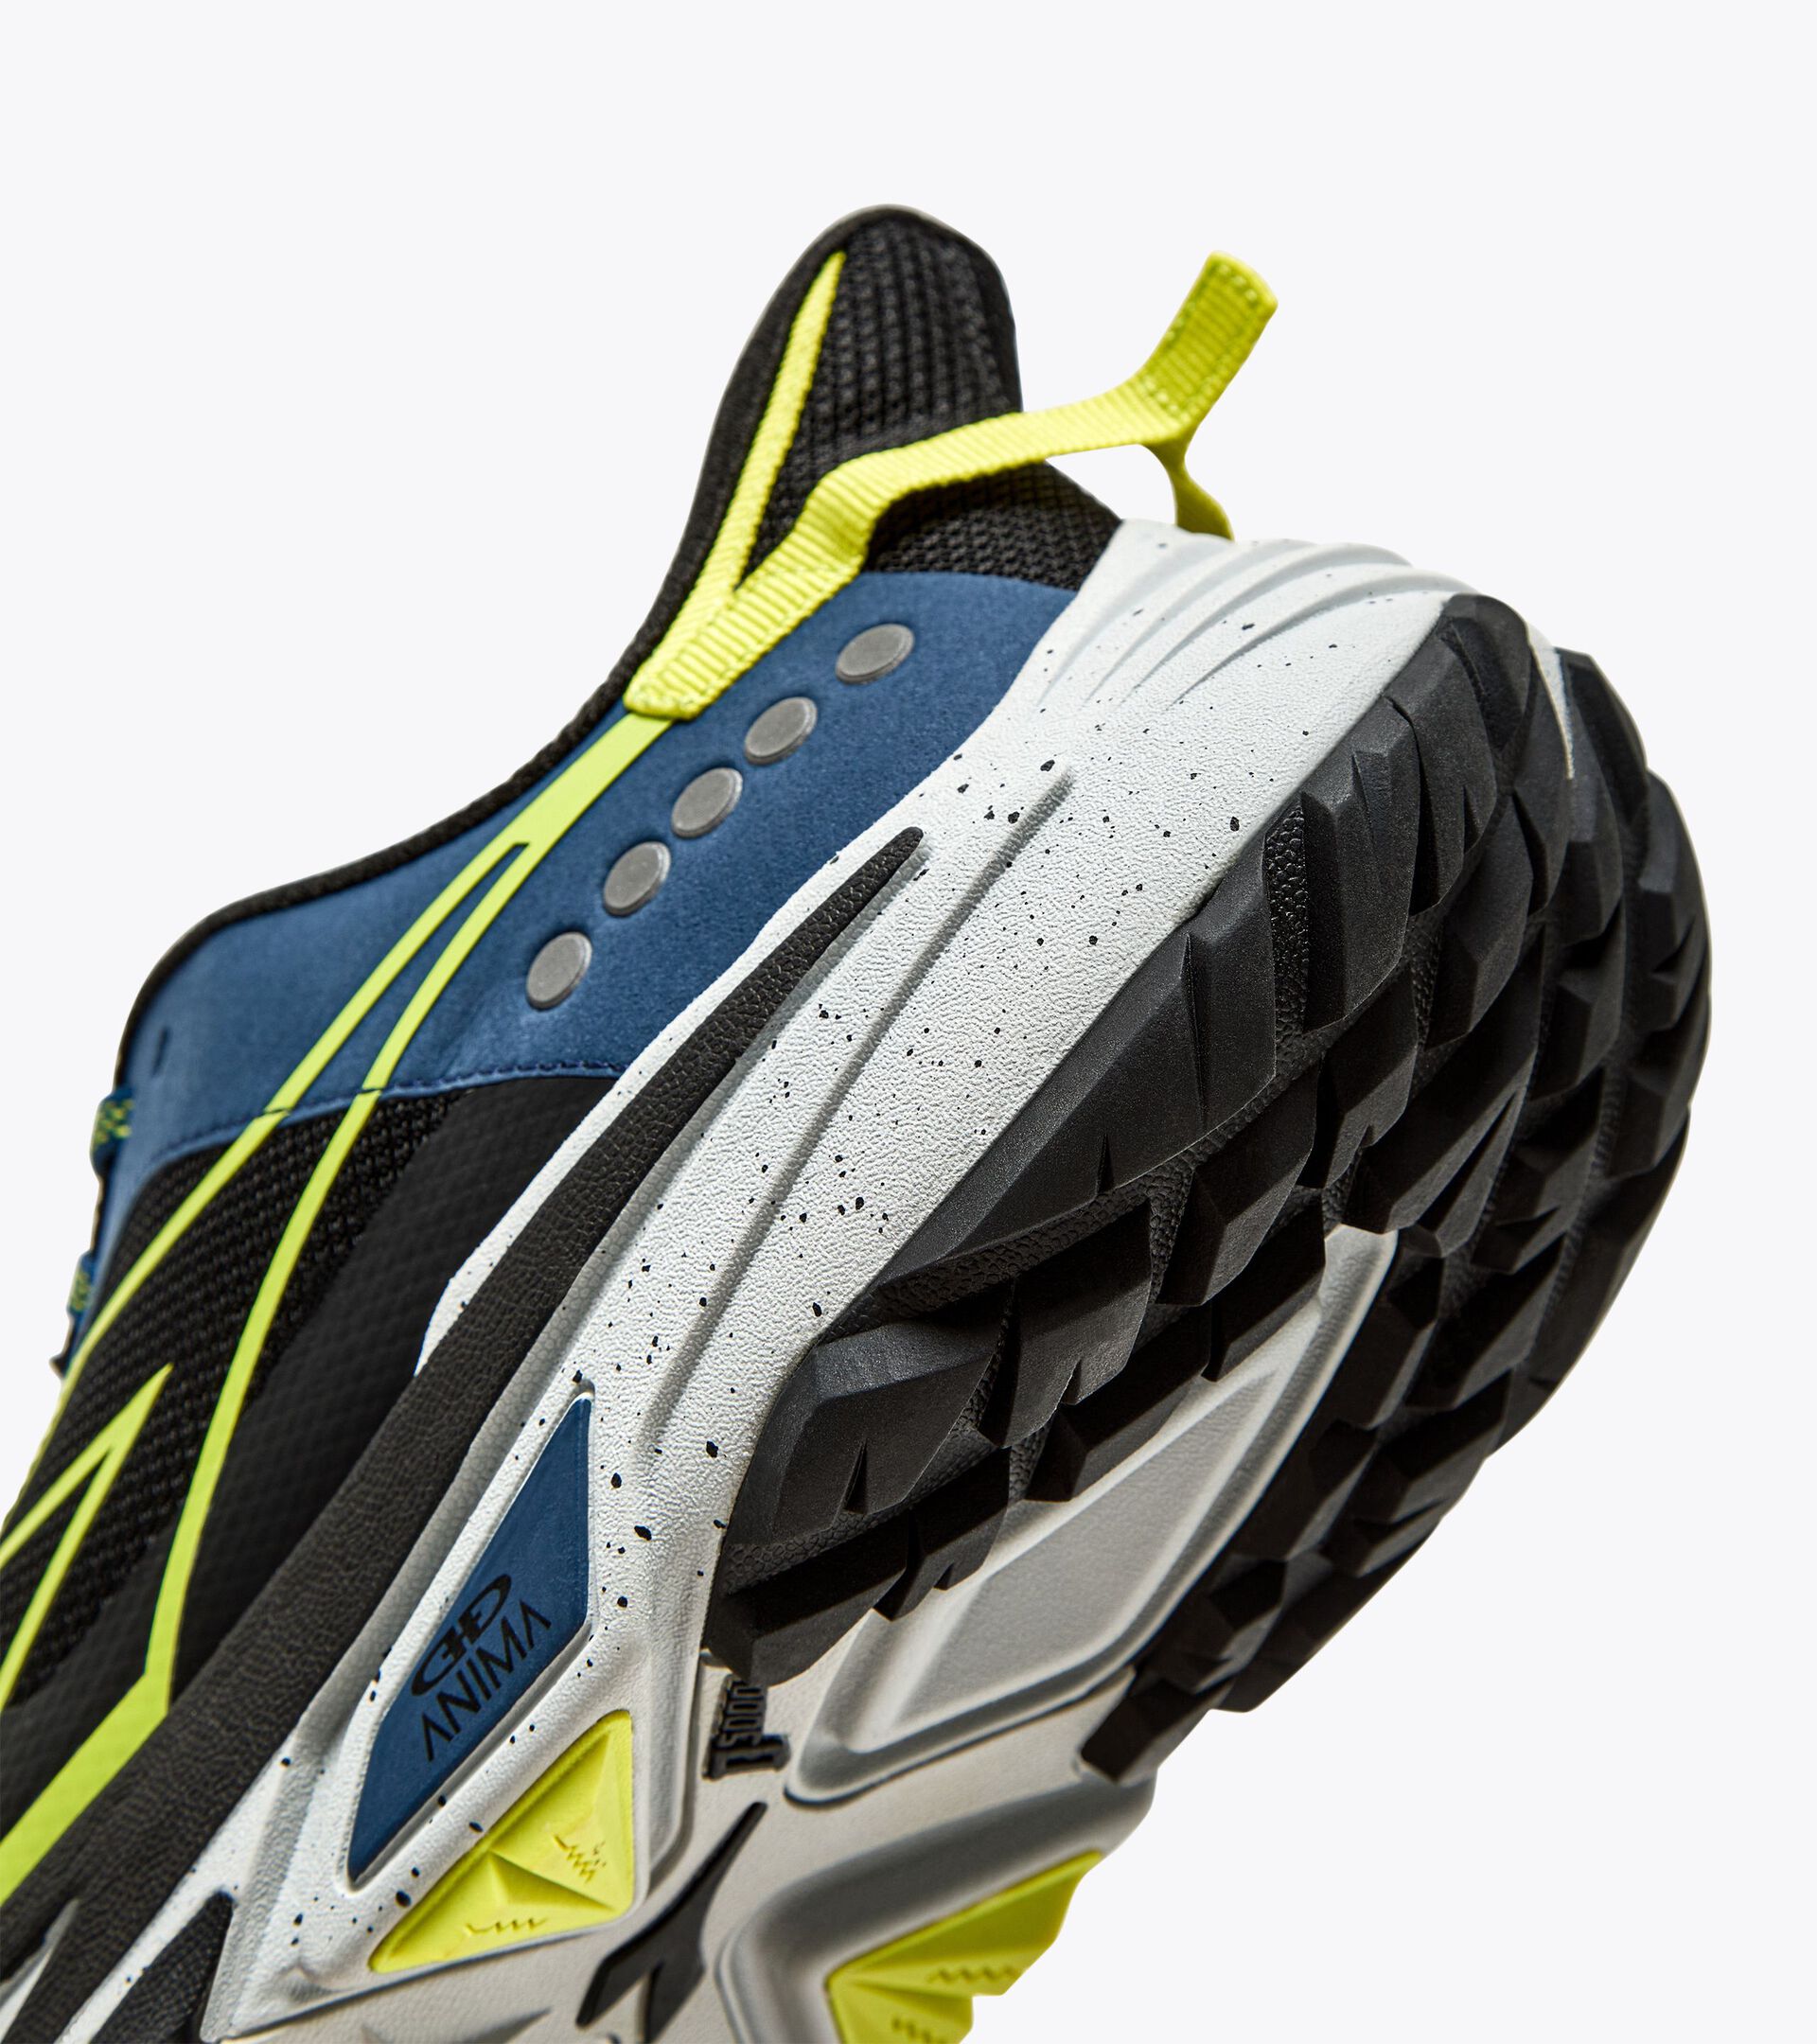 Chaussures de Trail Running – Homme EQUIPE SESTRIERE-XT NOIR/ONAGRE/ARGENT DD - Diadora